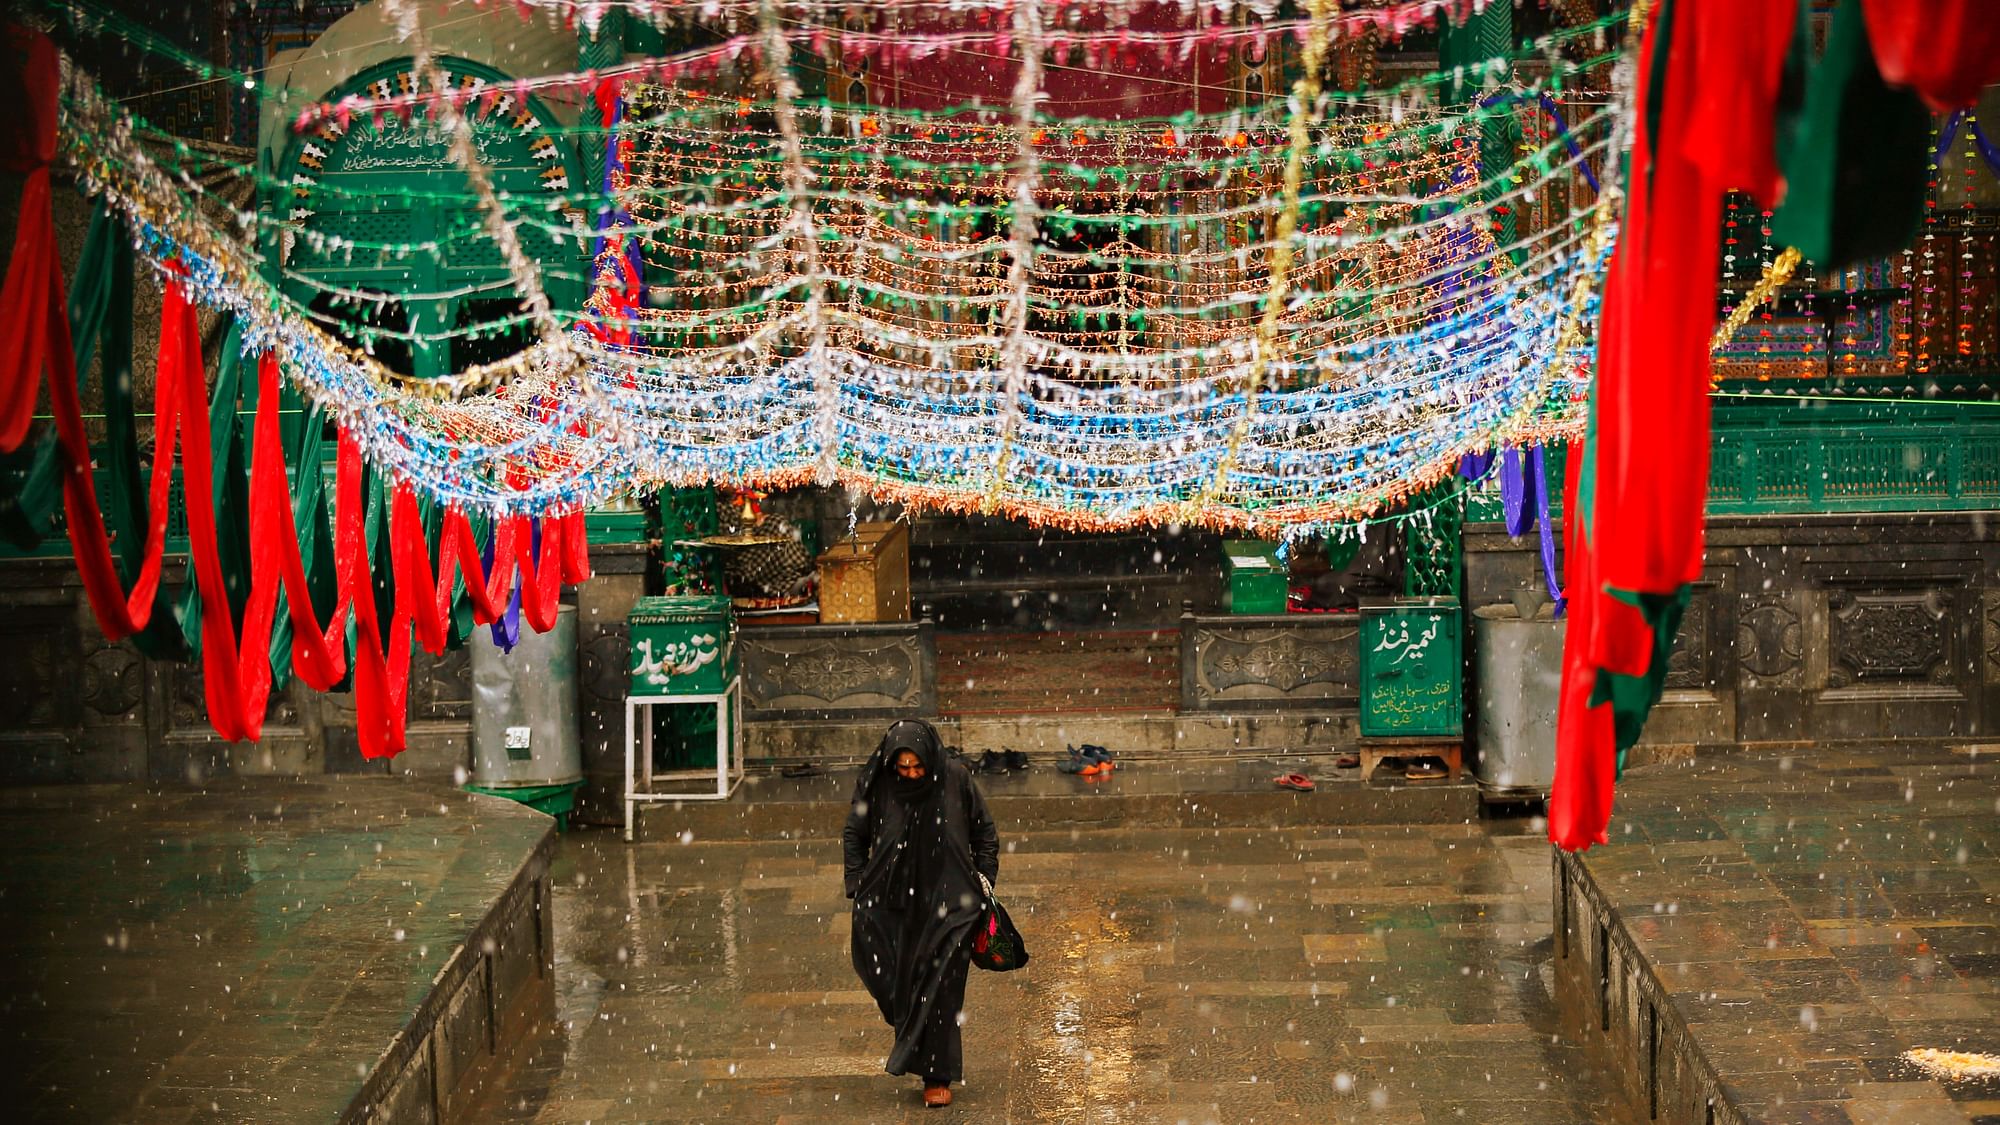 A Kashmiri Muslim woman walks outside a Muslim shrine as it rains in Srinagar. (Image used for representational purposes.)